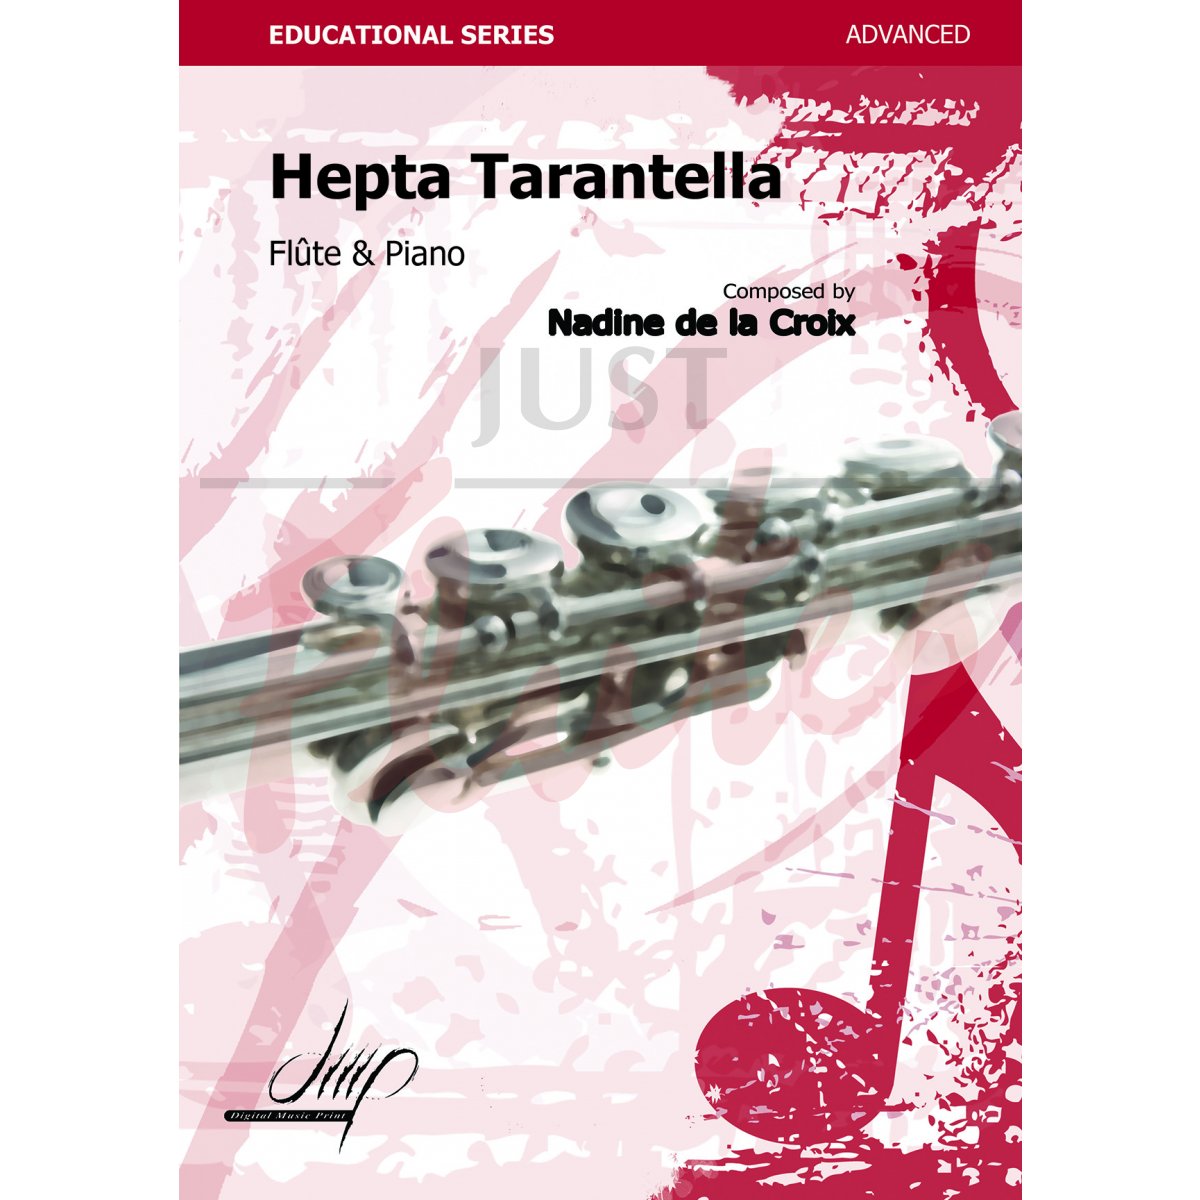 Hepta Tarantella for flute and piano